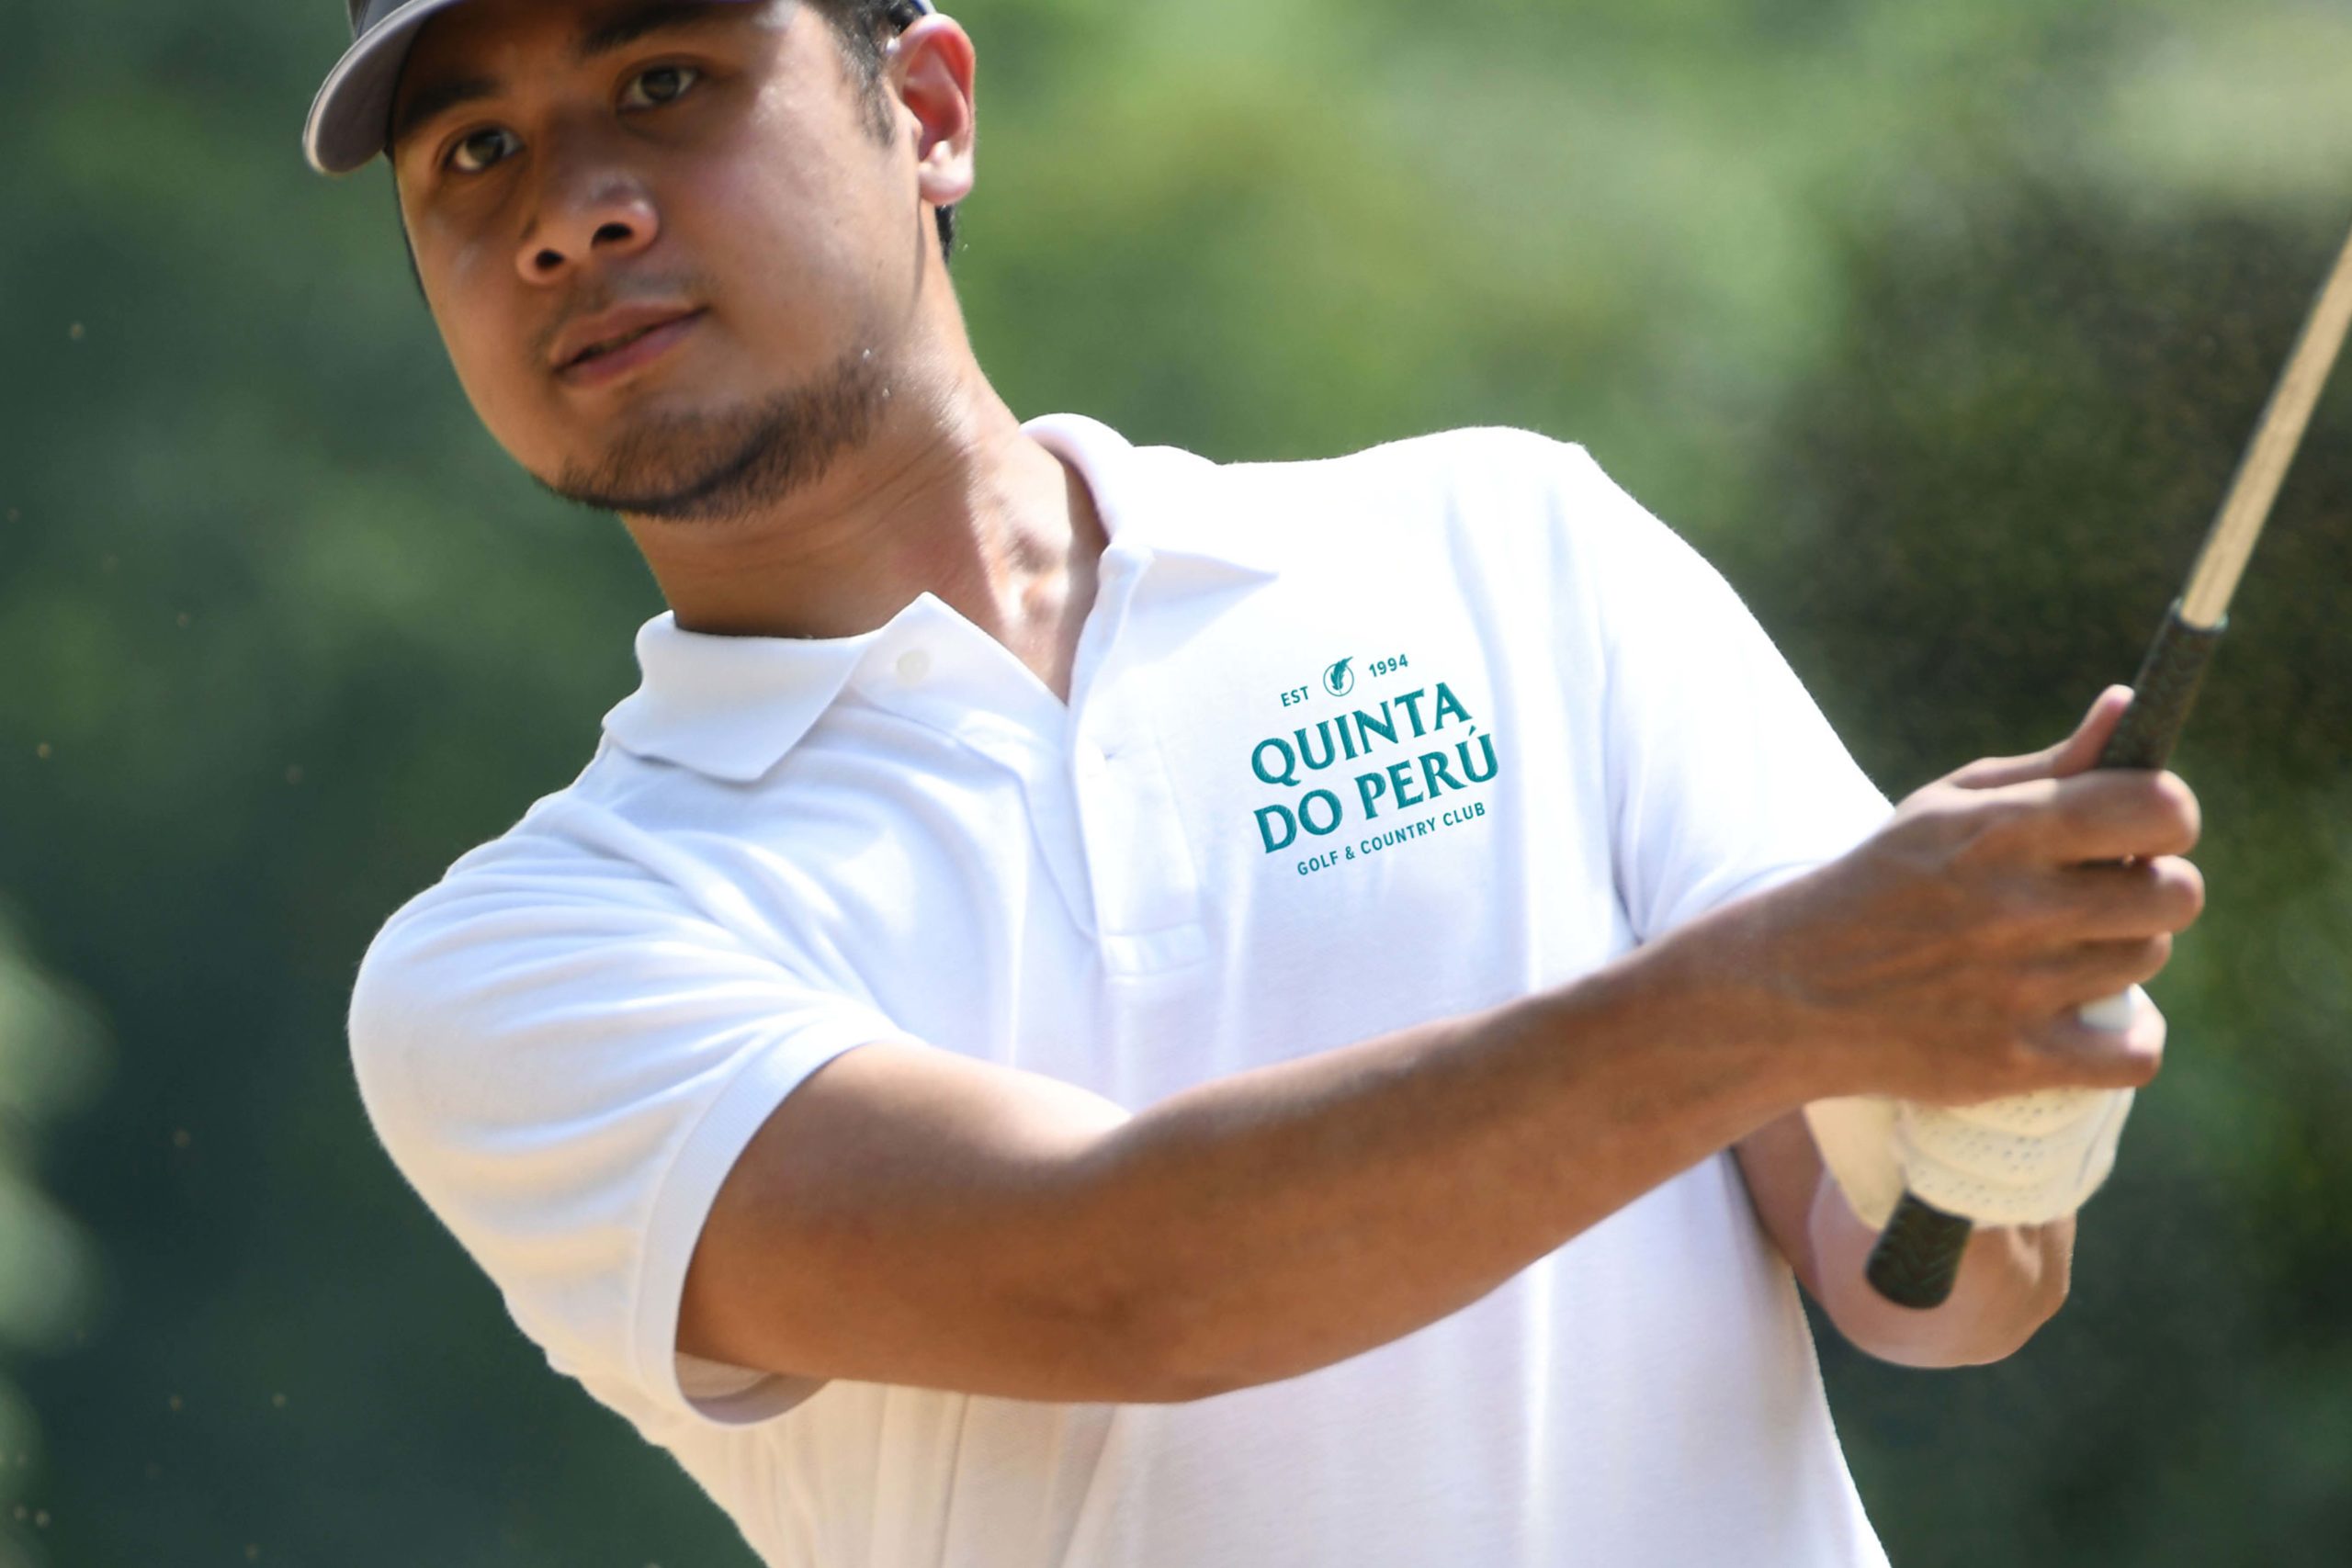 QDP Quinta Do Peru Golf & Country Club turquoise logo printed on golf shirt worn by a golfer